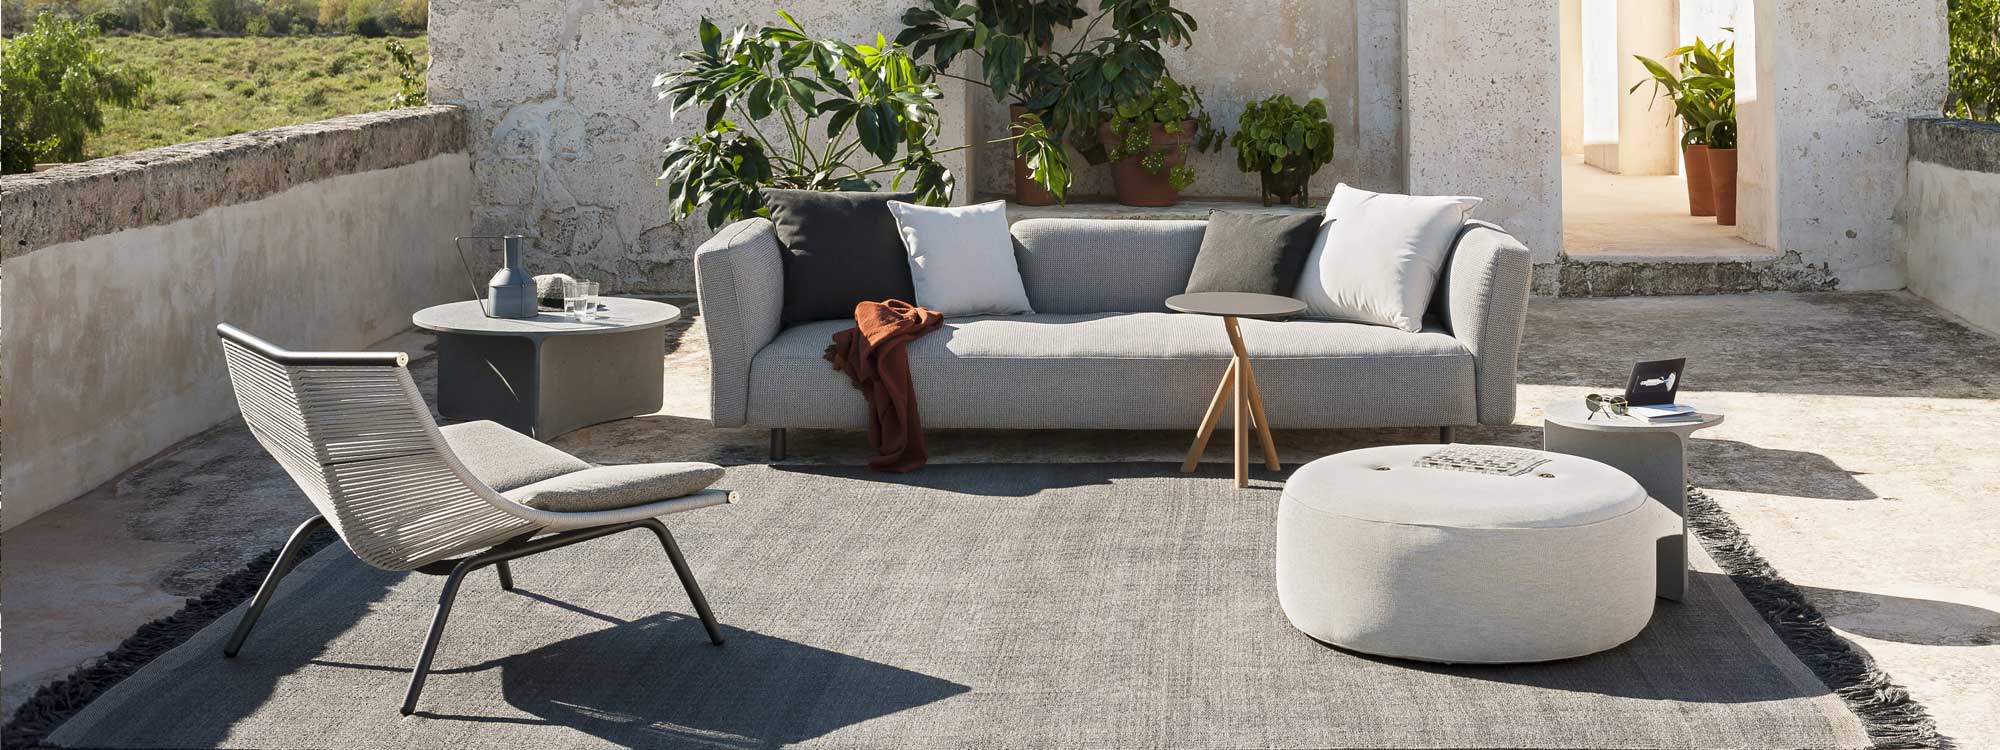 Image of RODA Mamba luxury garden sofa, Laze modern lounge chair and Aspic concrete garden table, shown on rustic Italian courtyard